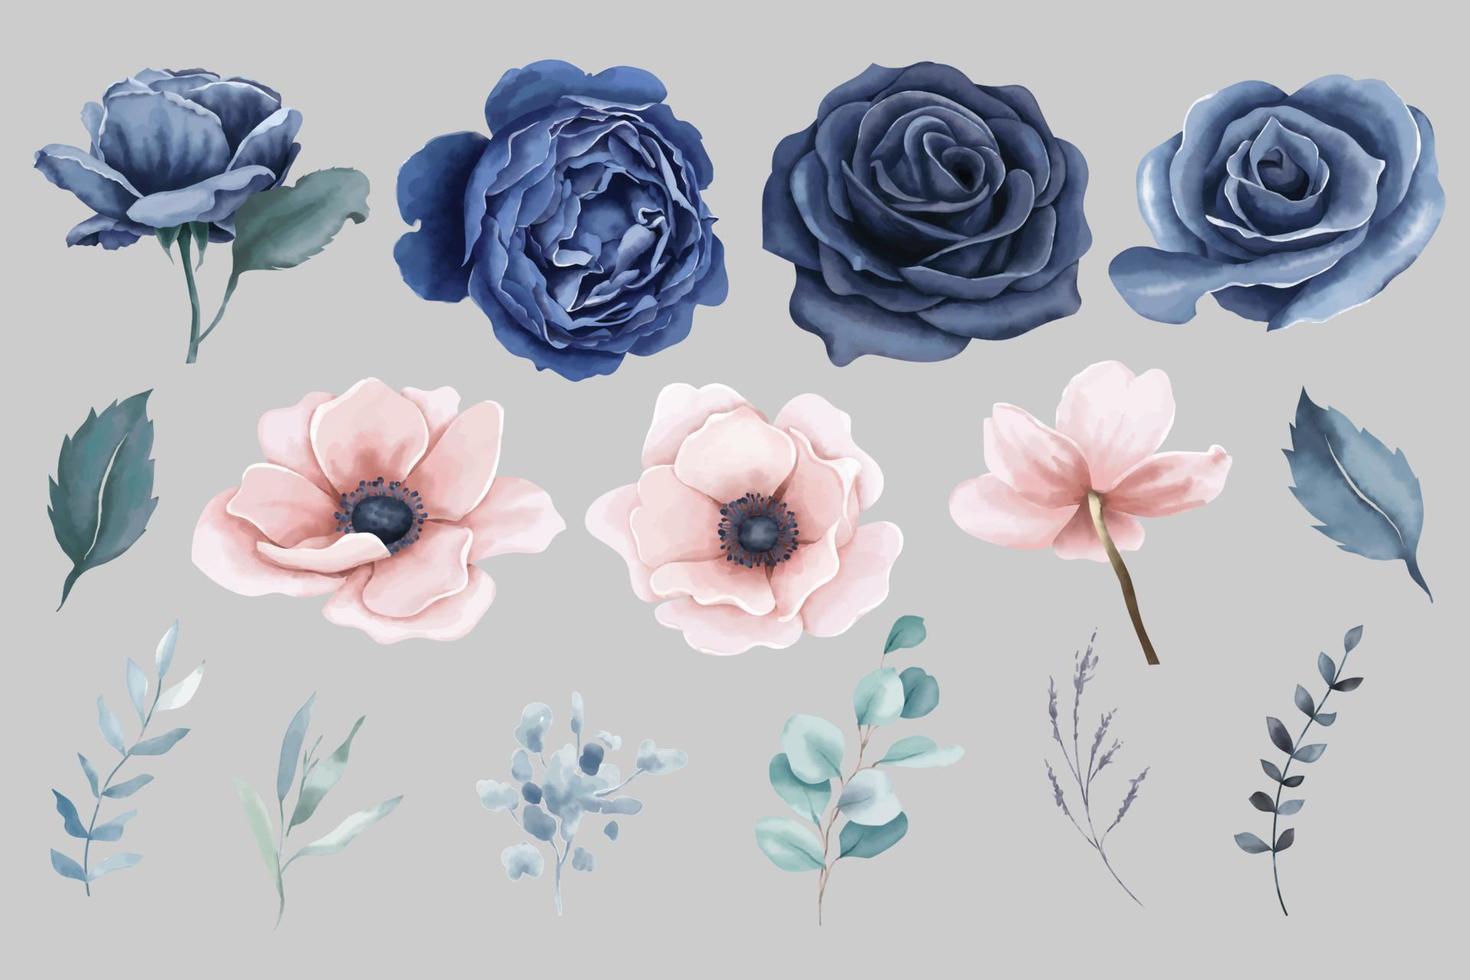 aquarel marineblauwe rozen en perzik anemonen bloemen elementen vector